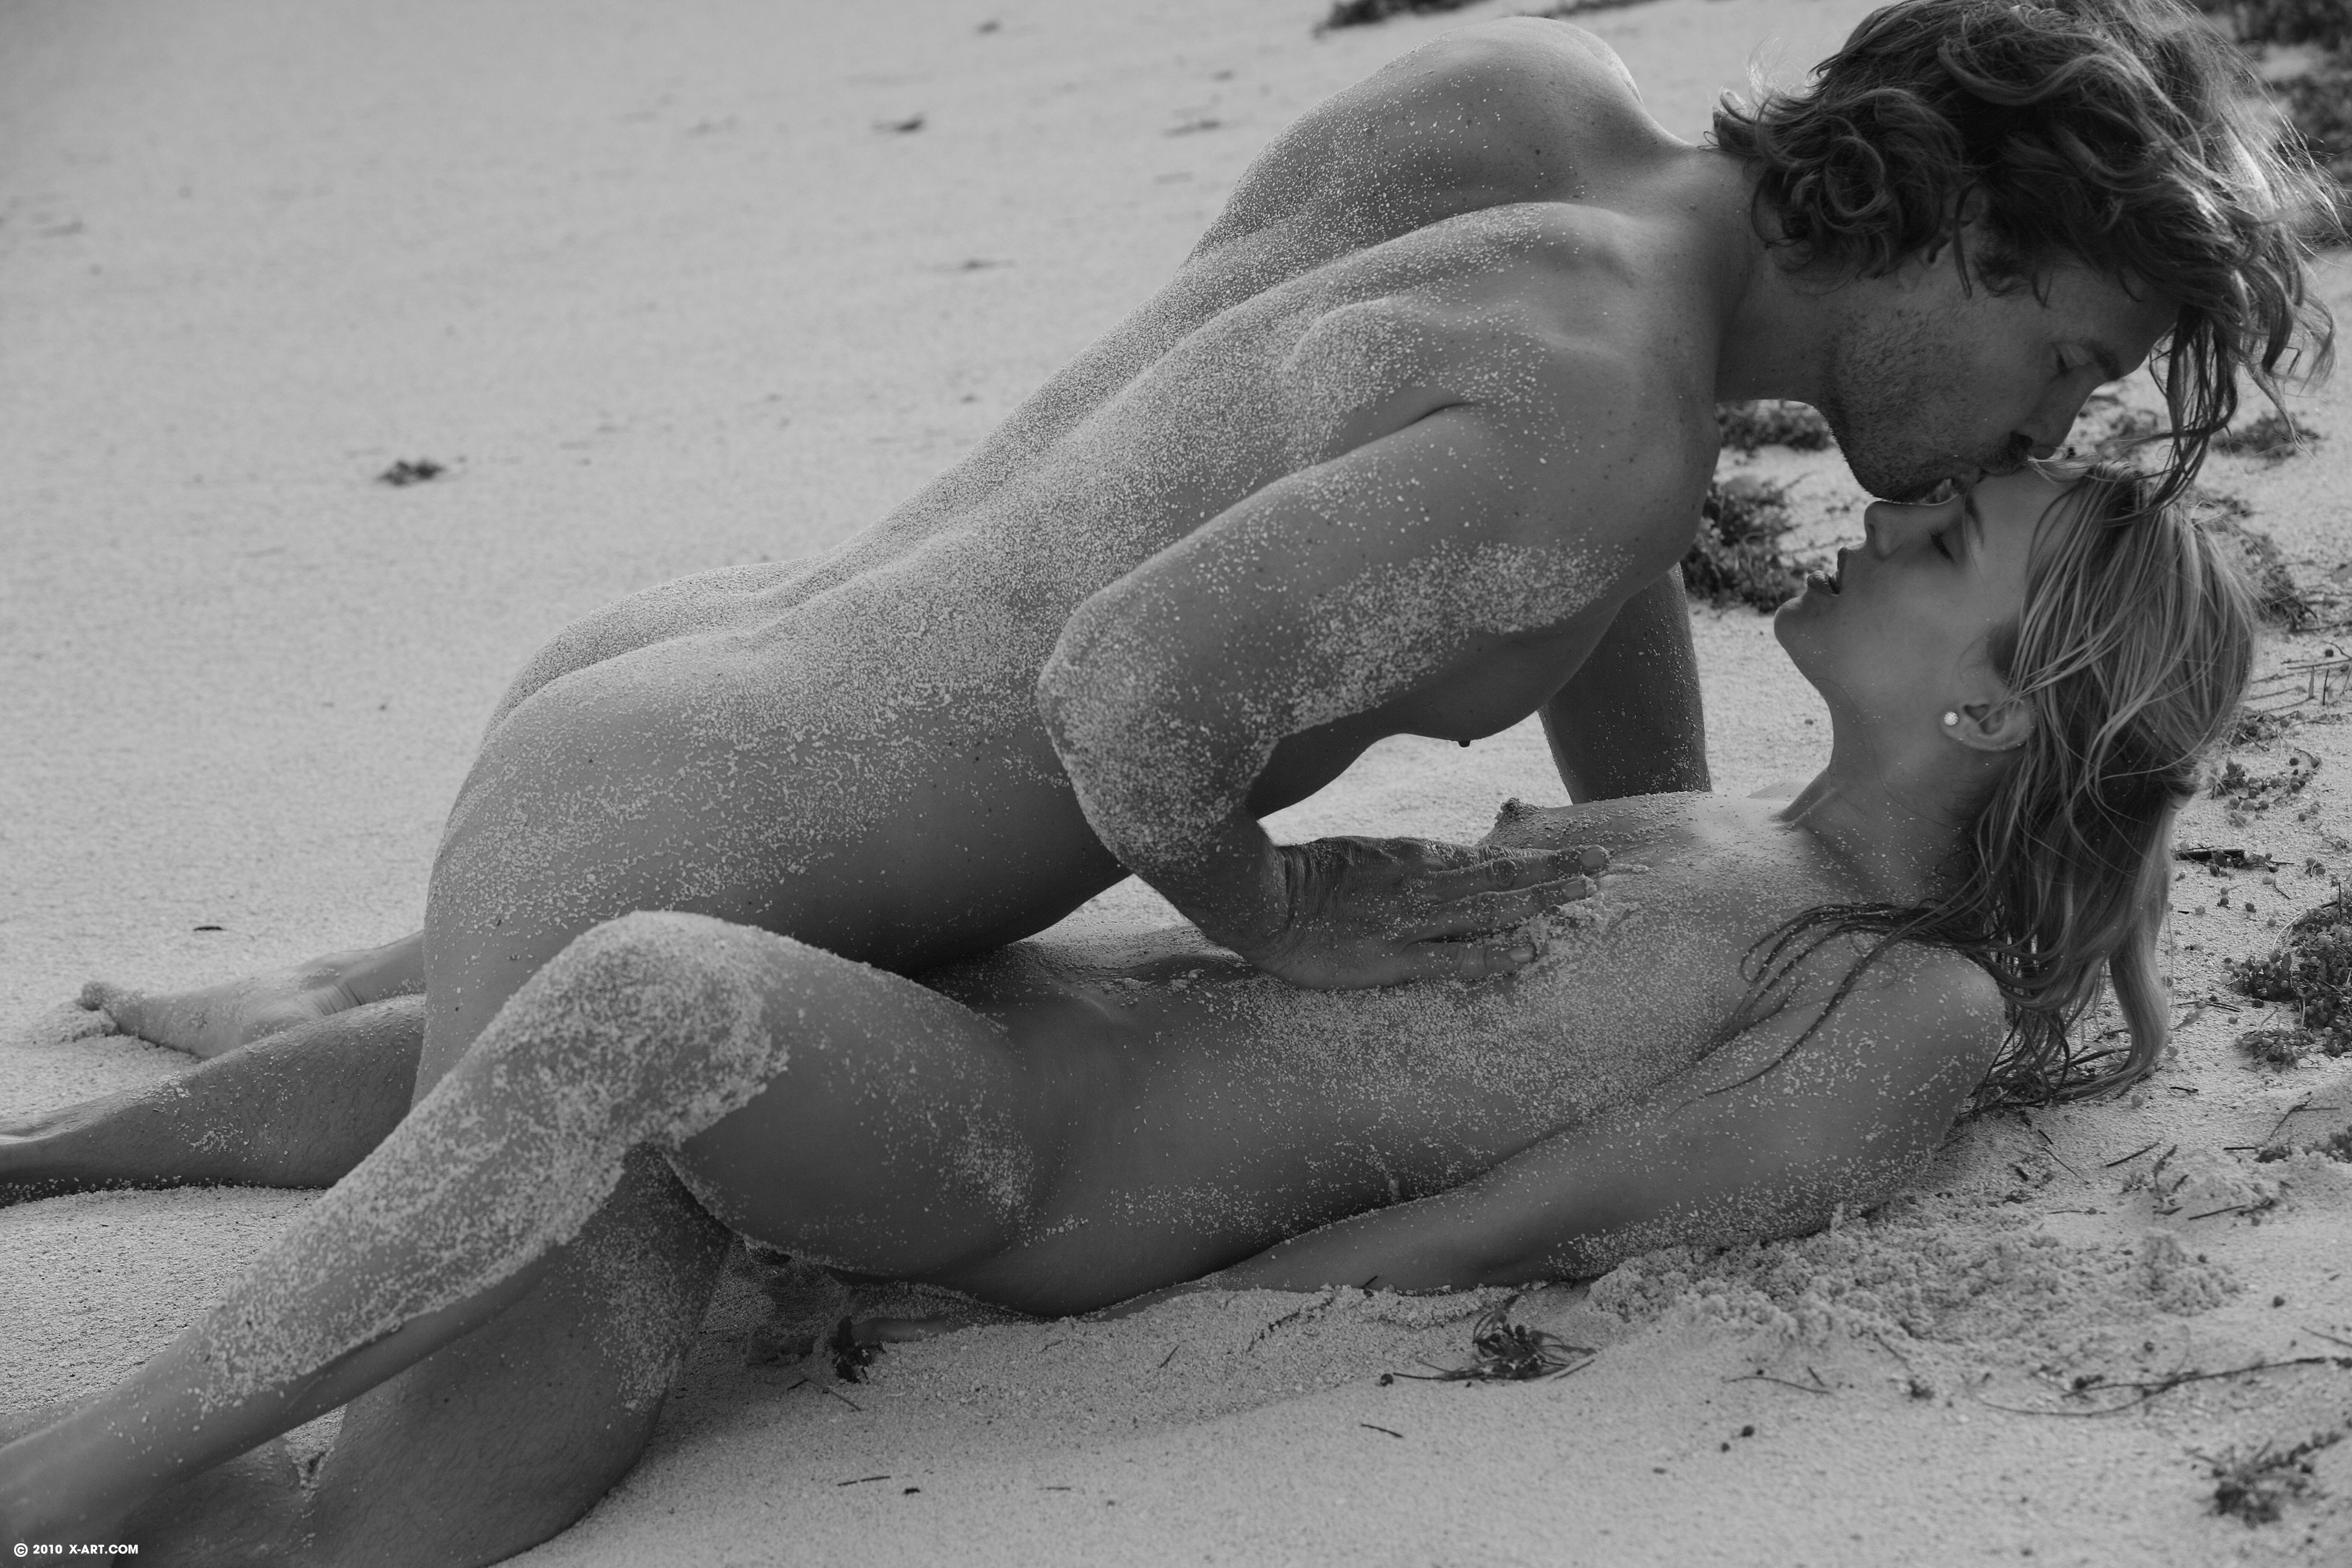 Beach erotic on the Erotic: 14,465